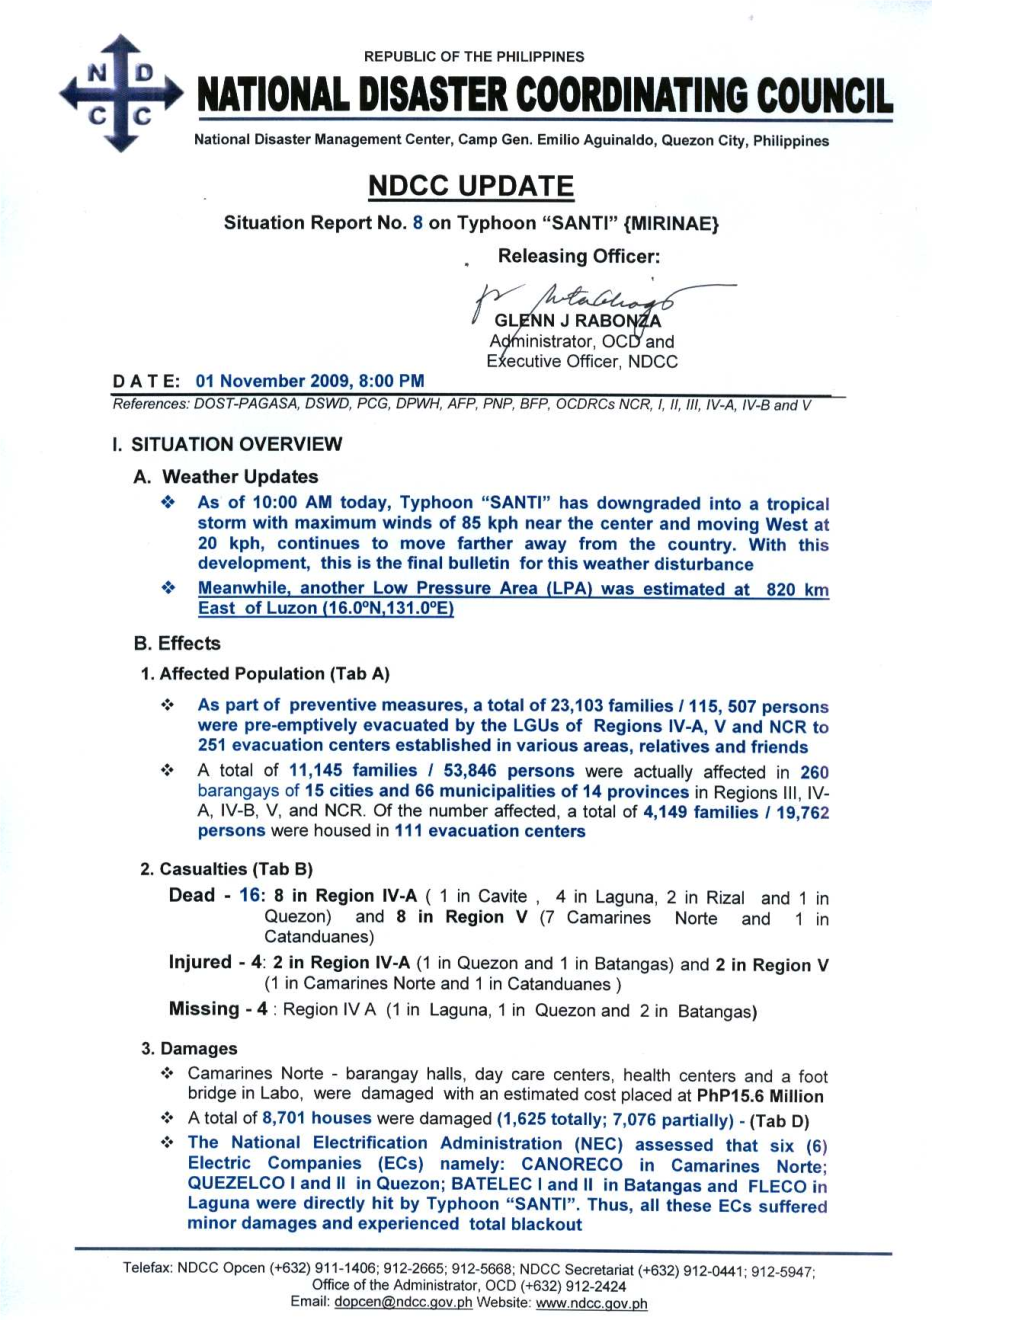 NDCC Update No. 8 on Typhoon SANTI (MIRINAE)